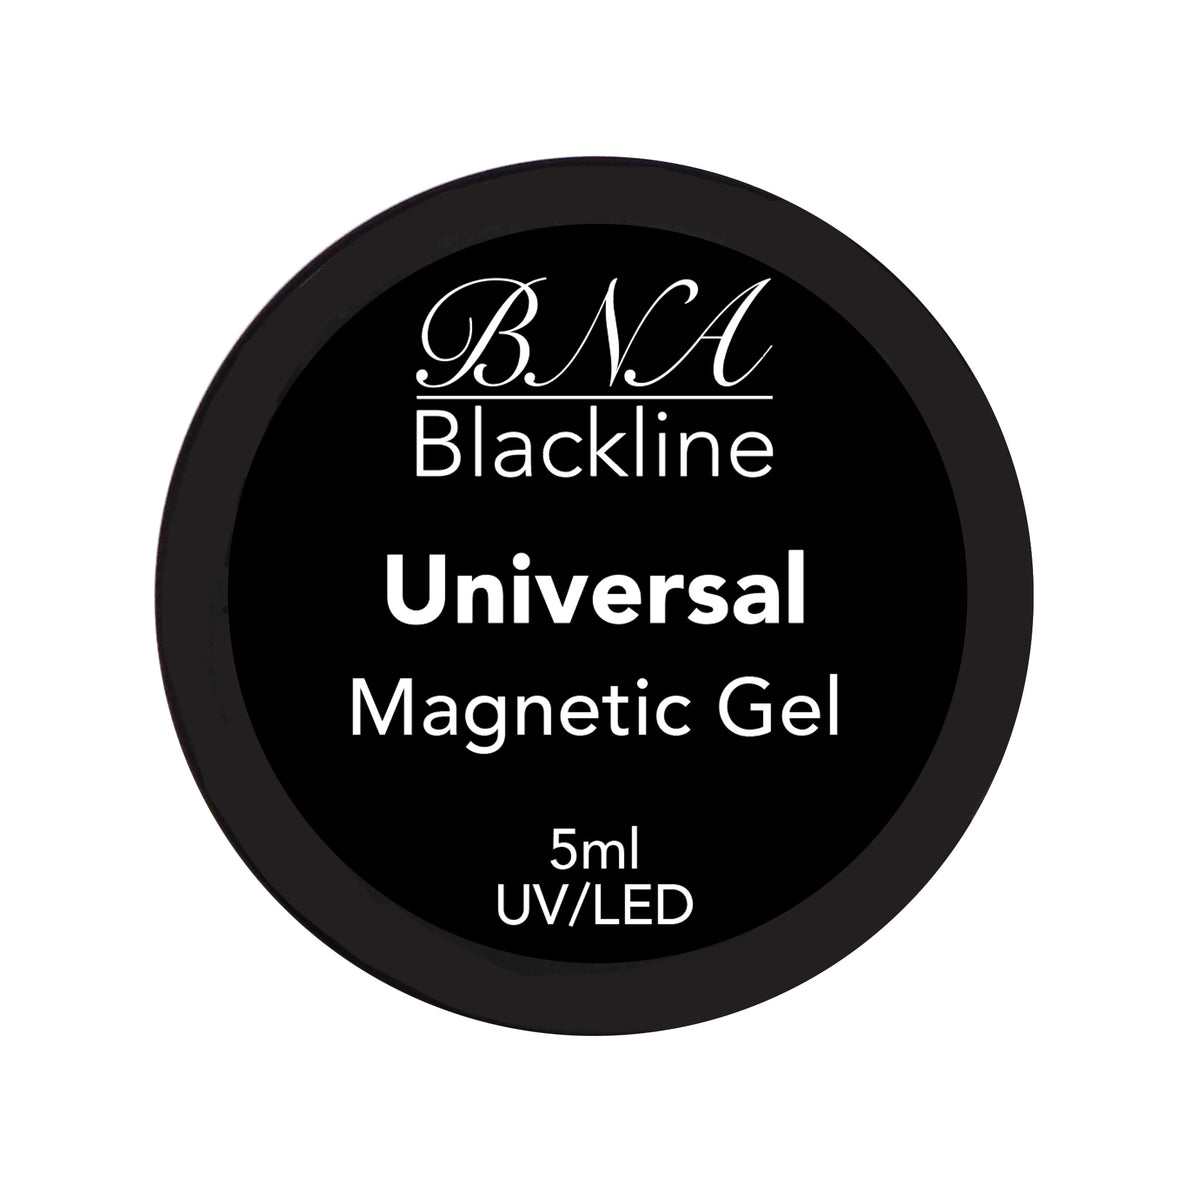 Universal Magnetic Gel